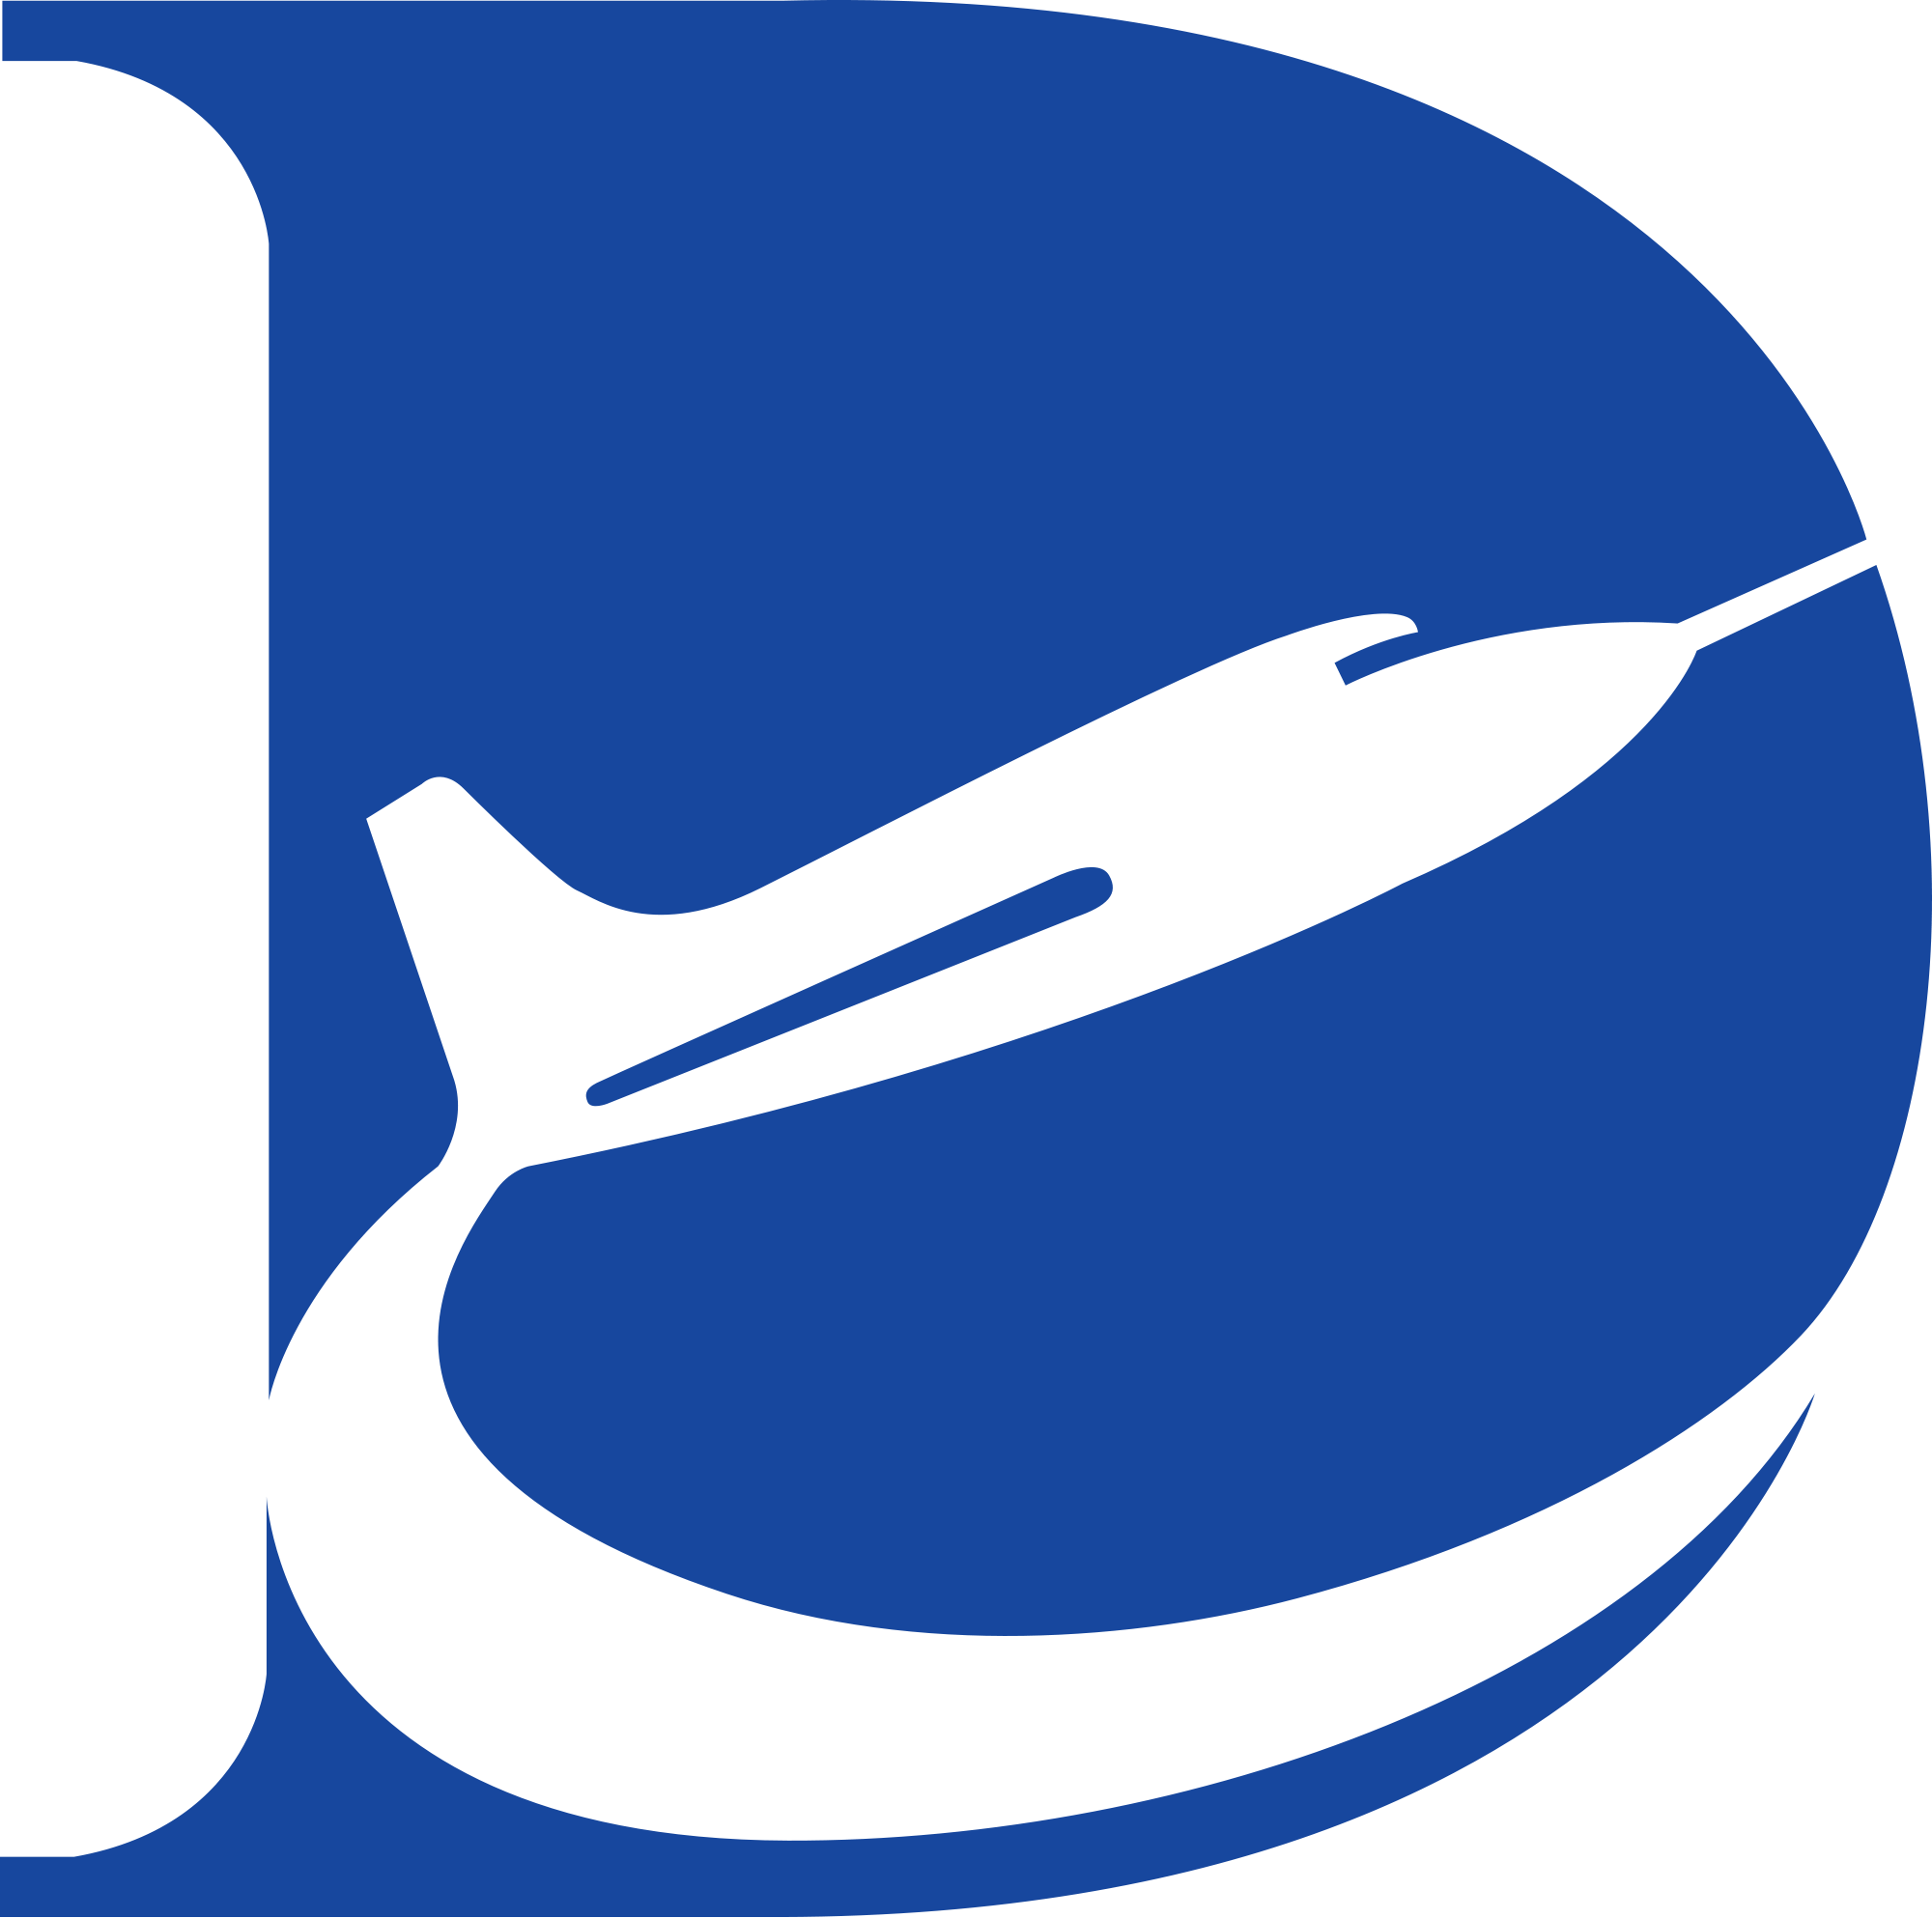 File:US-NASA-DrydenFlightResearchCenter-Logo.svg - Wikimedia Commons